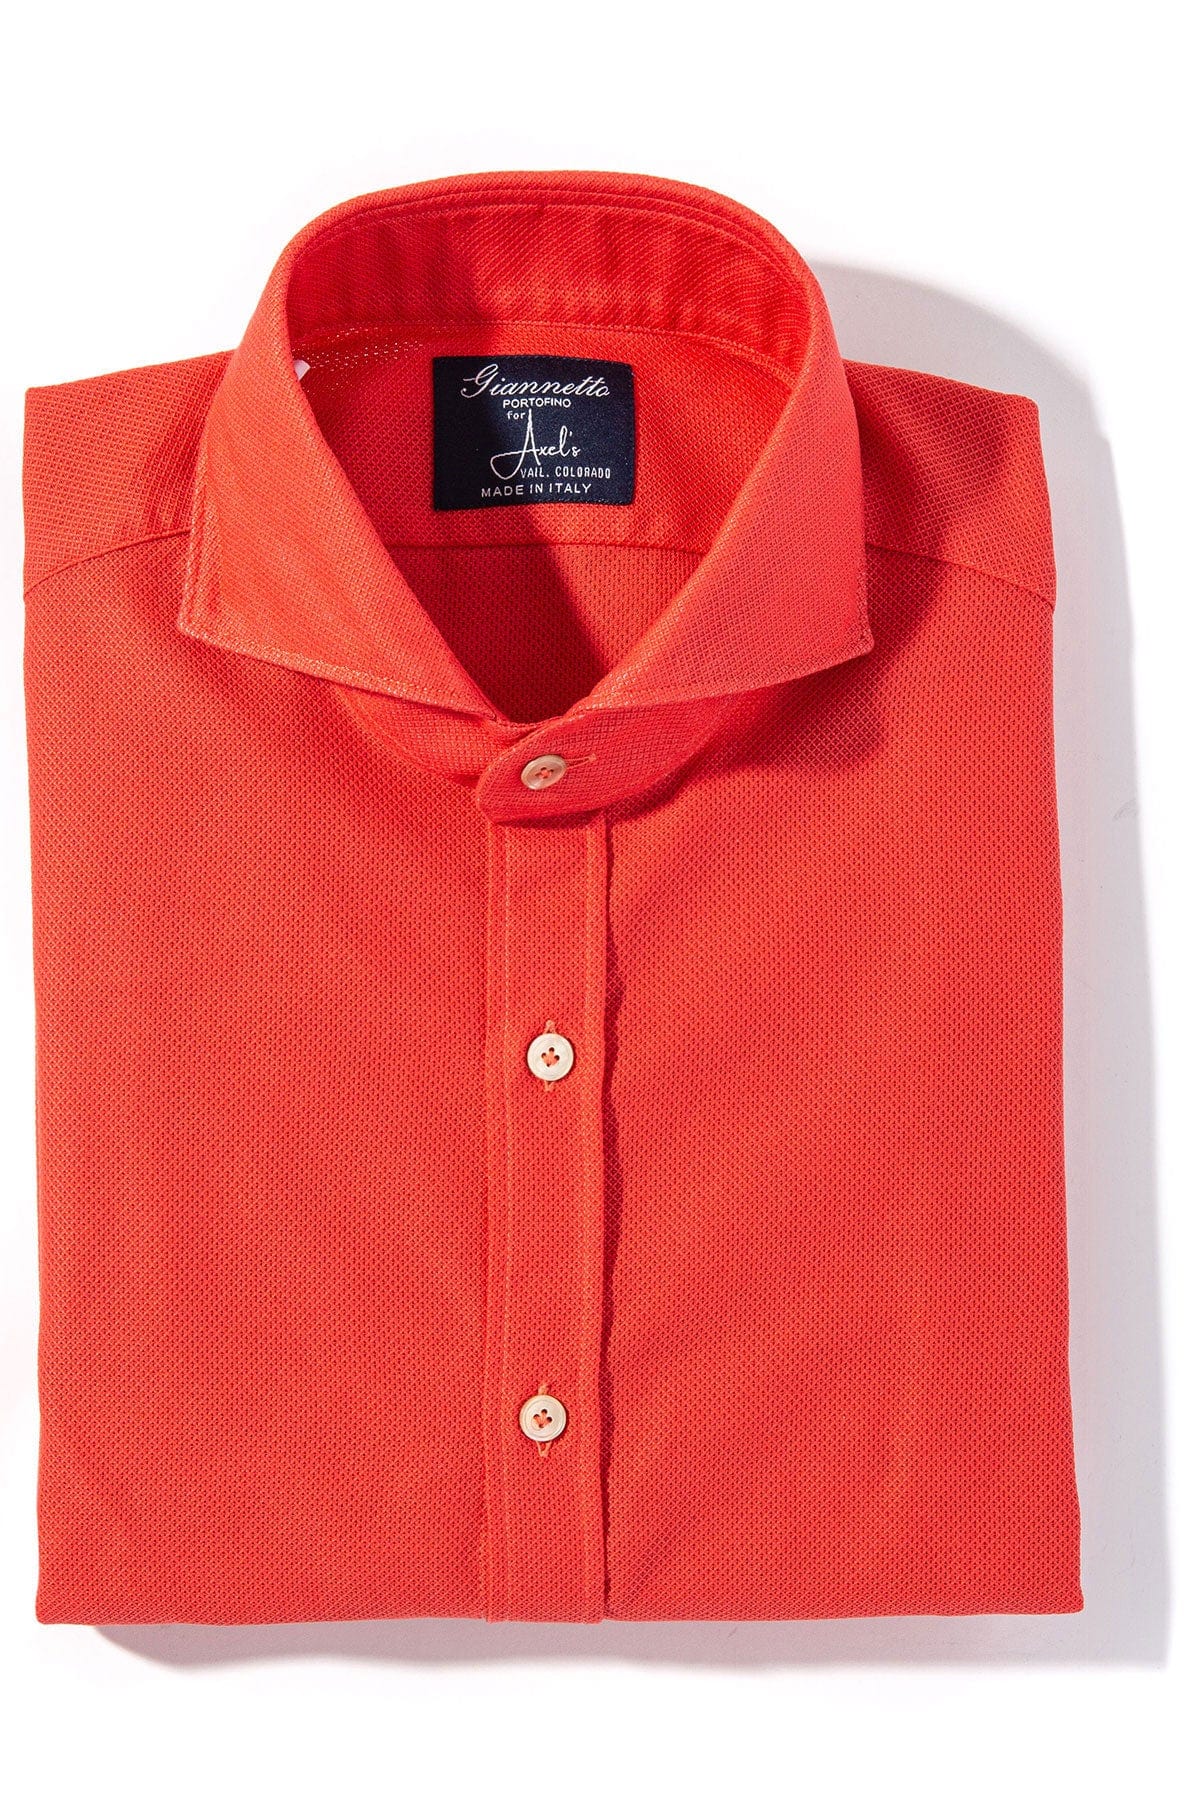 Vaison Giro Inglese Shirt in Orange - AXEL'S